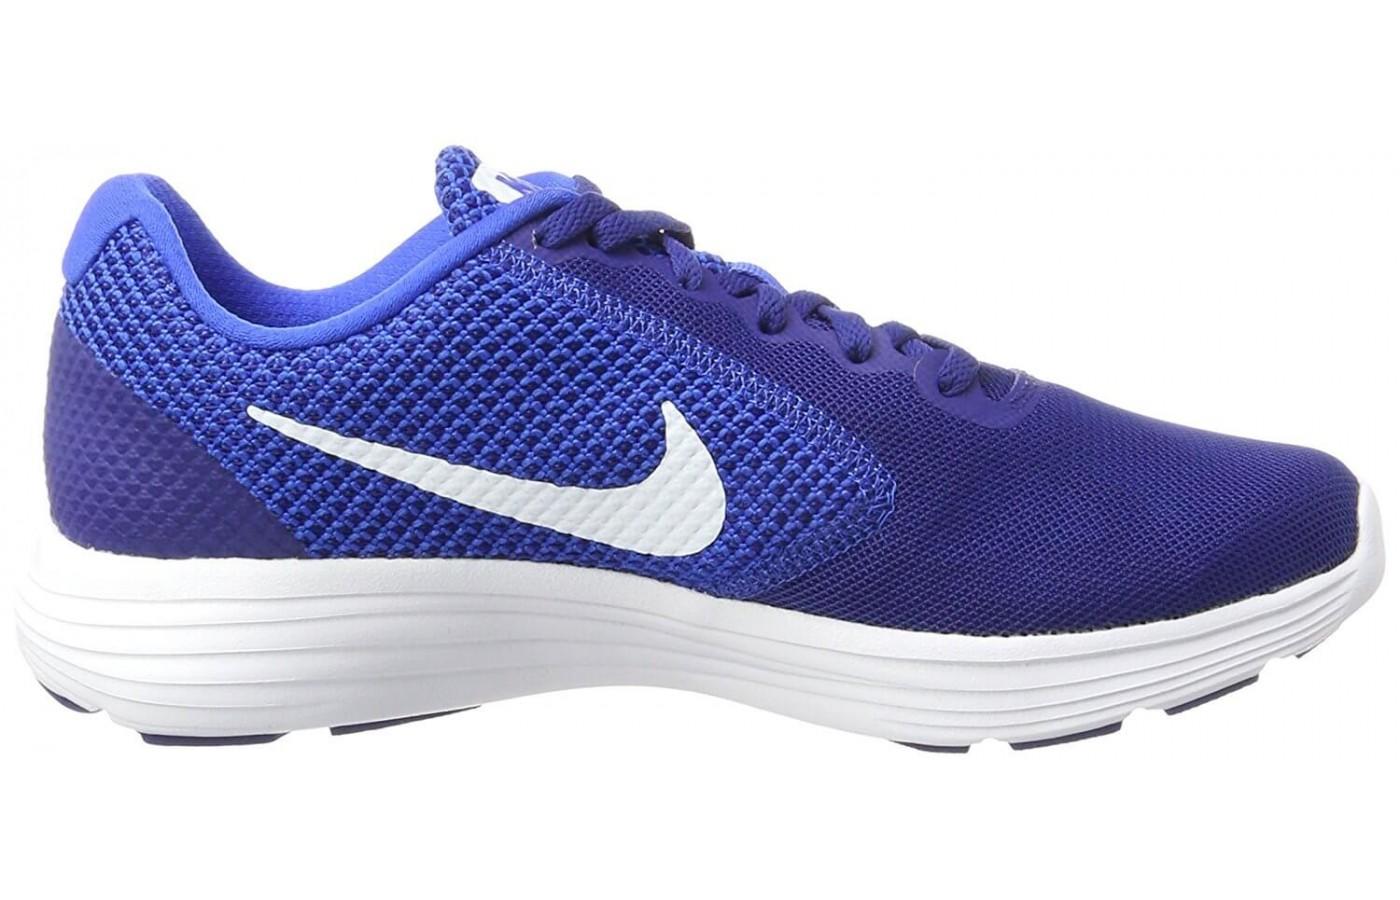 The Nike Revolution 3 in men's cobalt blue version